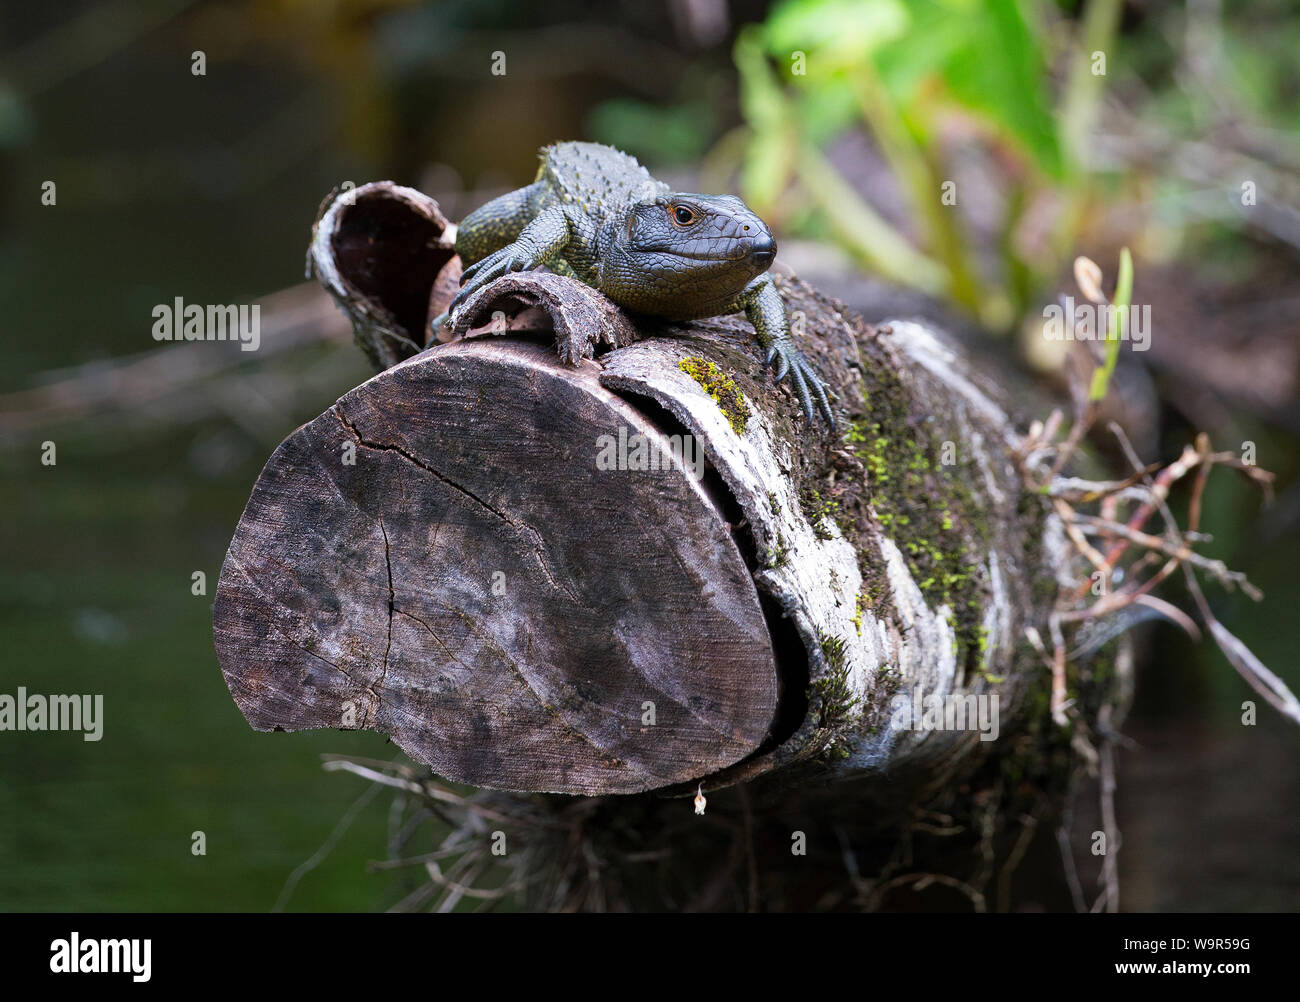 Northern caiman lizard taken in Amazonian jungle Stock Photo